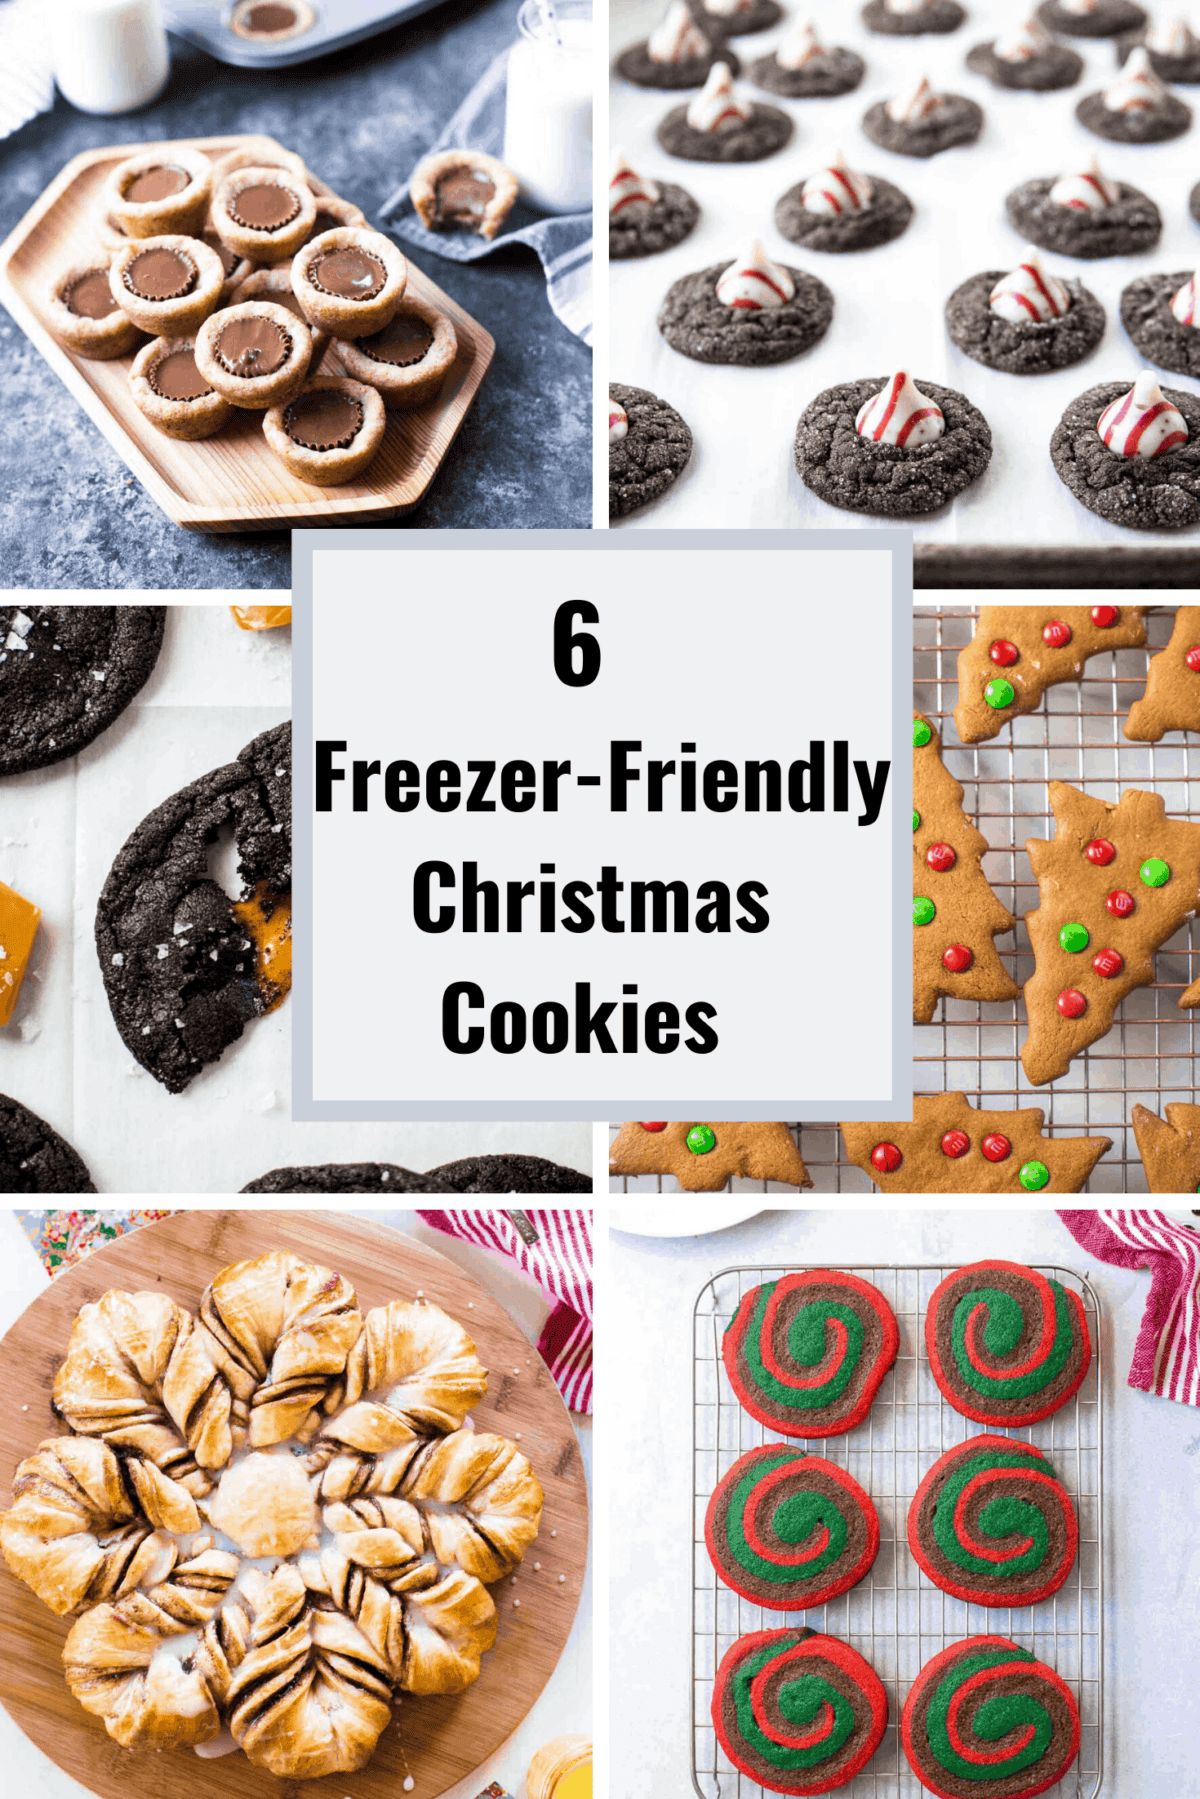 freezer friendly Christmas cookies